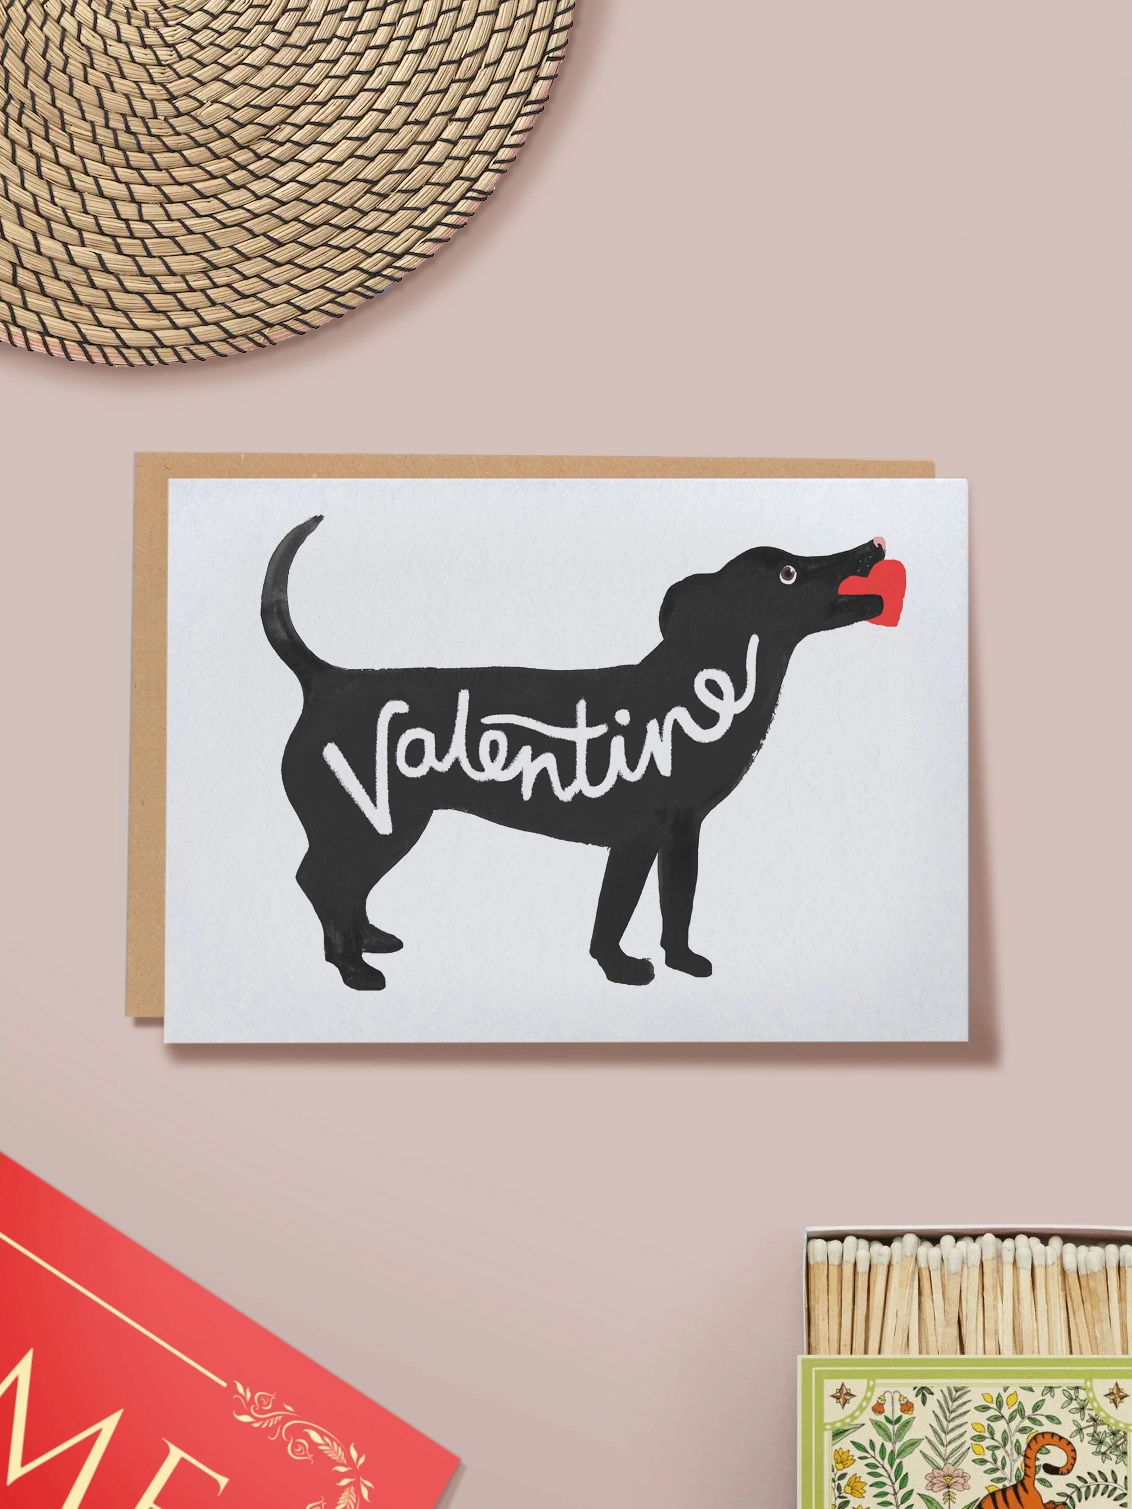 Dog Valentine's Card